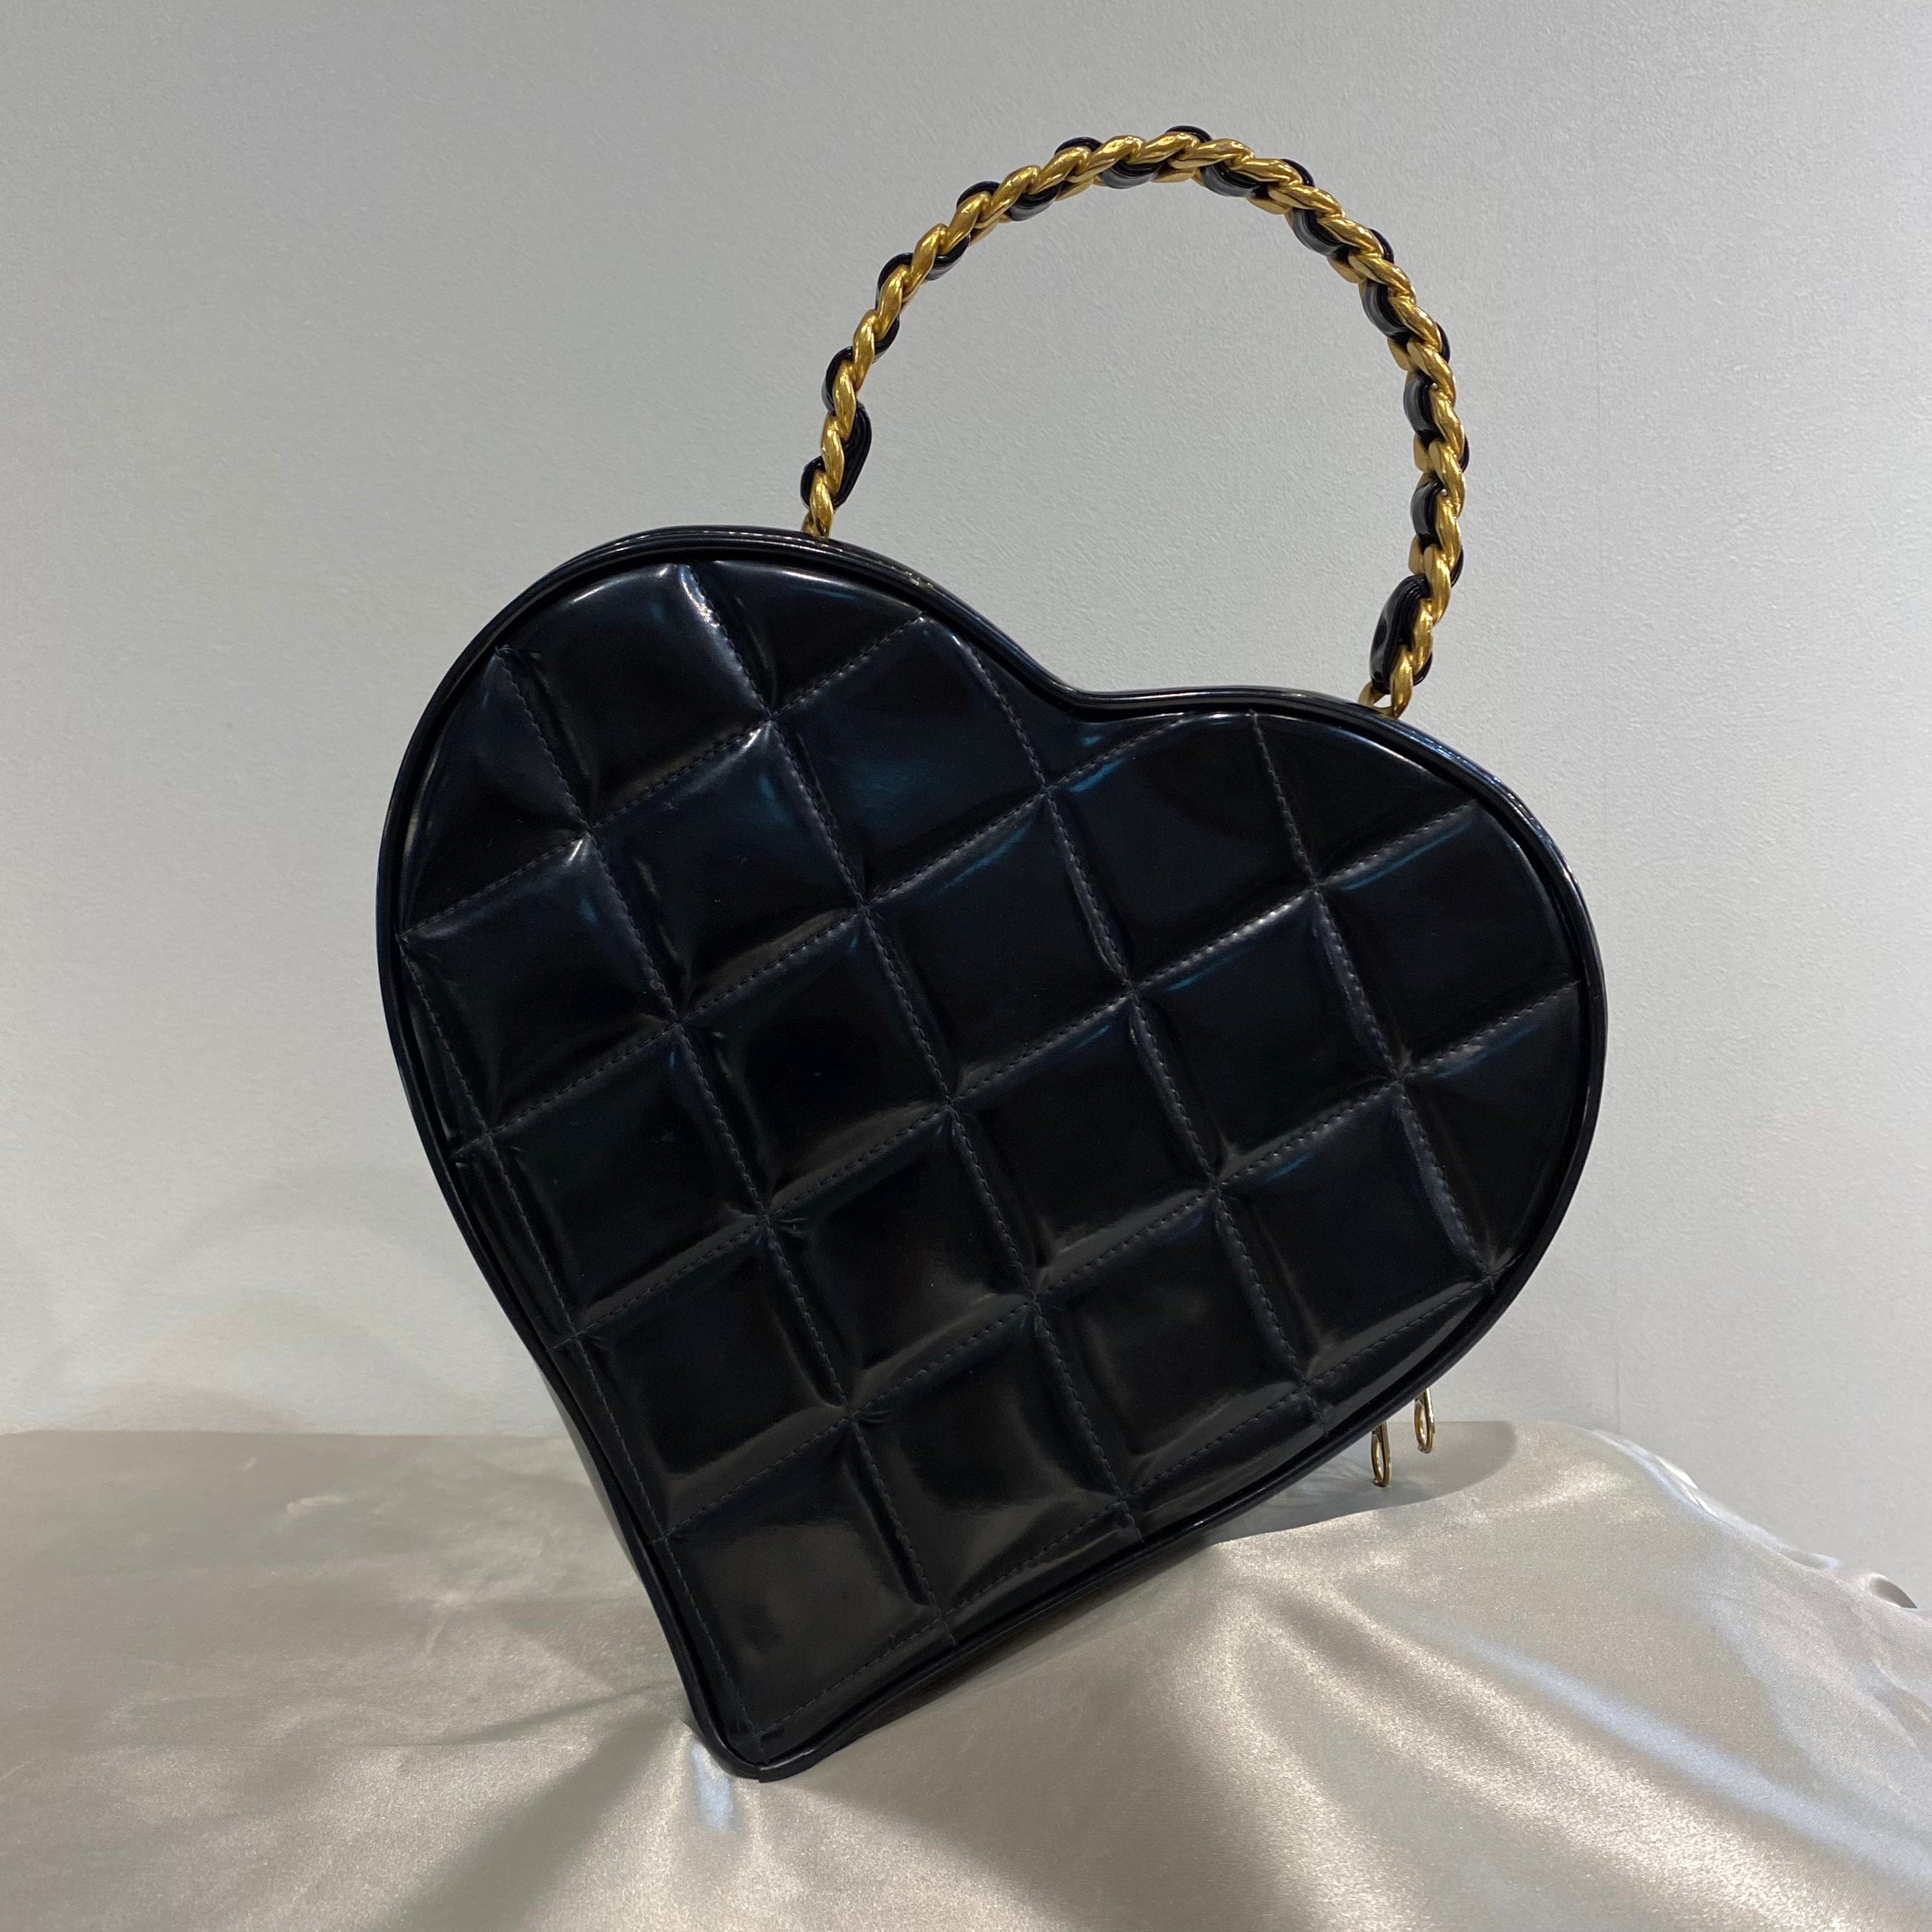 Chanel CHANEL VINTAGE HEART VANITY HAND BAG BLACK ENAMEL 90193109